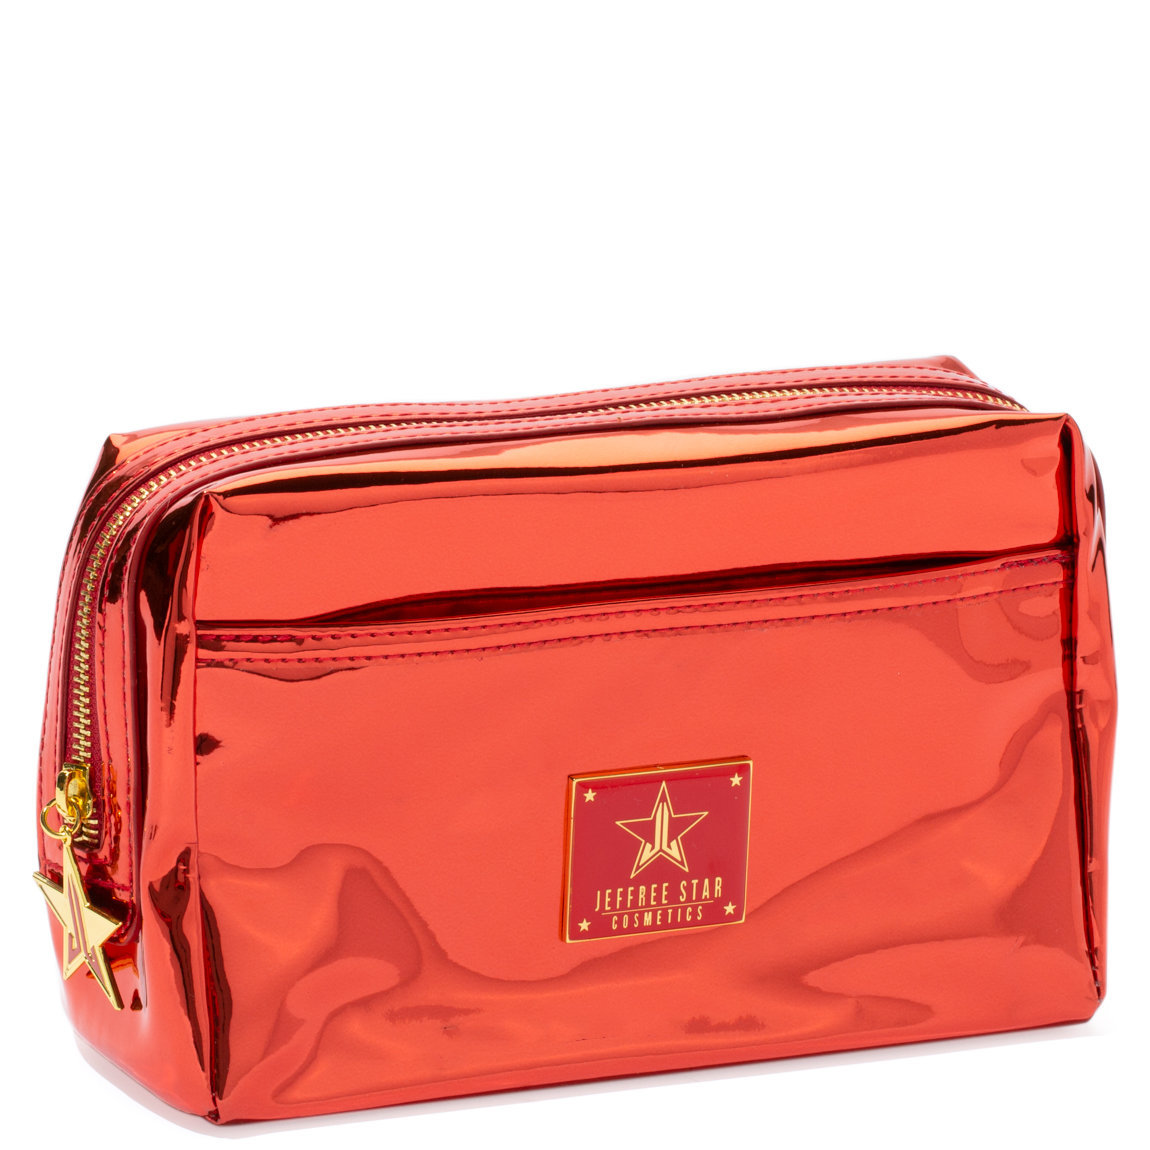 Jeffree Star Cosmetics Makeup Bag Reflective Red | Beautylish